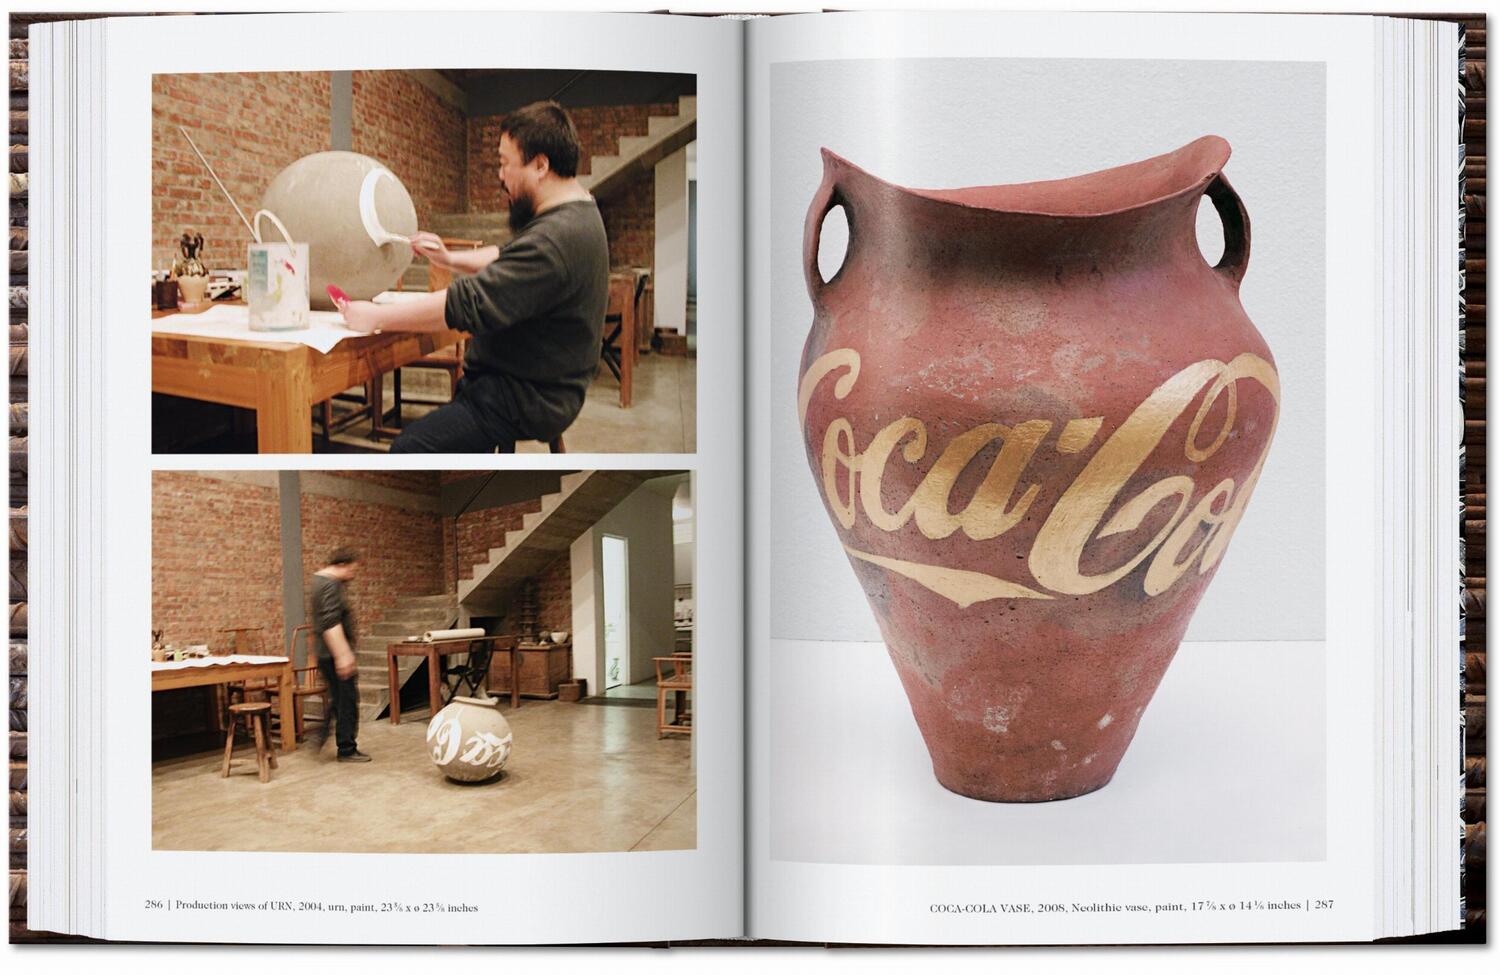 Bild: 9783836581950 | Ai Weiwei. 40th Ed. | Hans Werner Holzwarth | Buch | GER, Hardcover